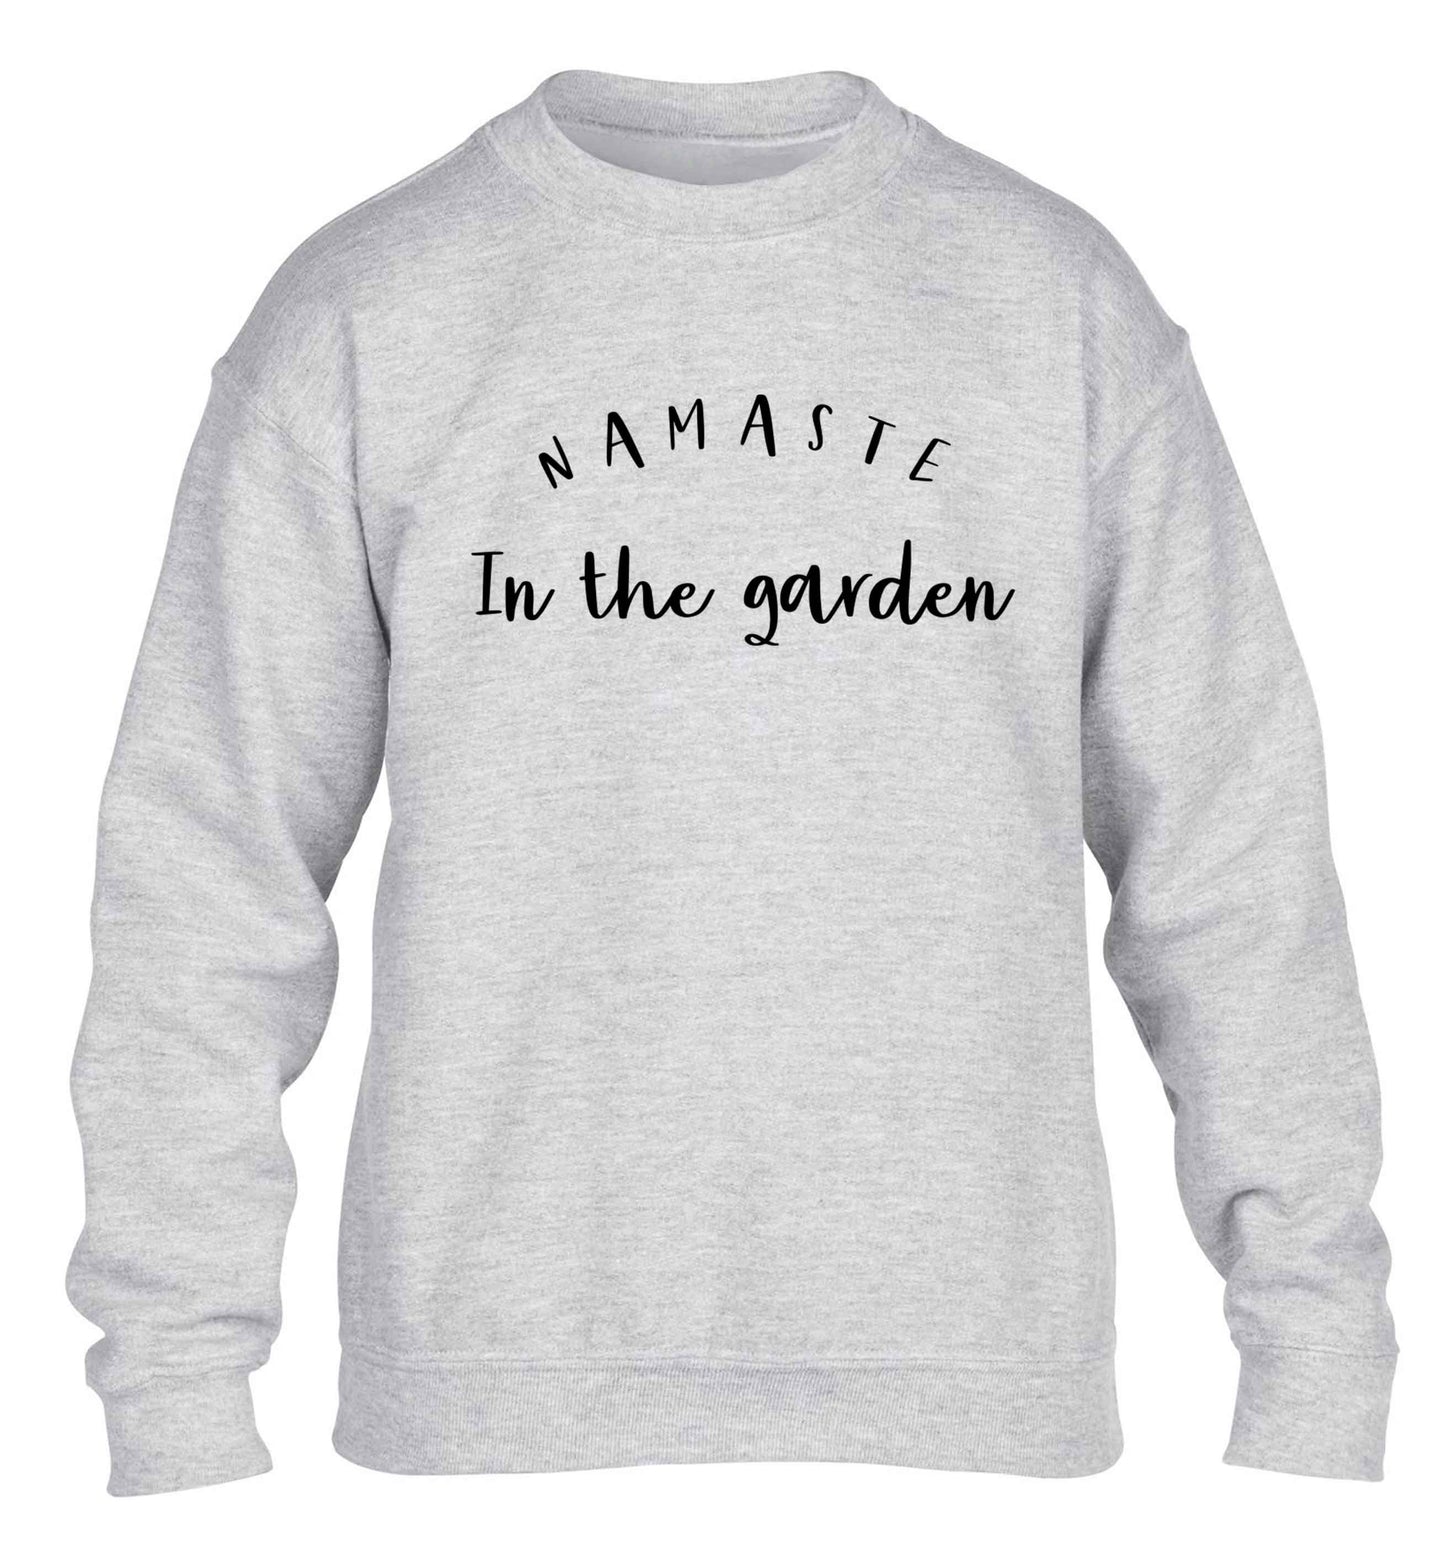 Namaste in the garden children's grey sweater 12-13 Years